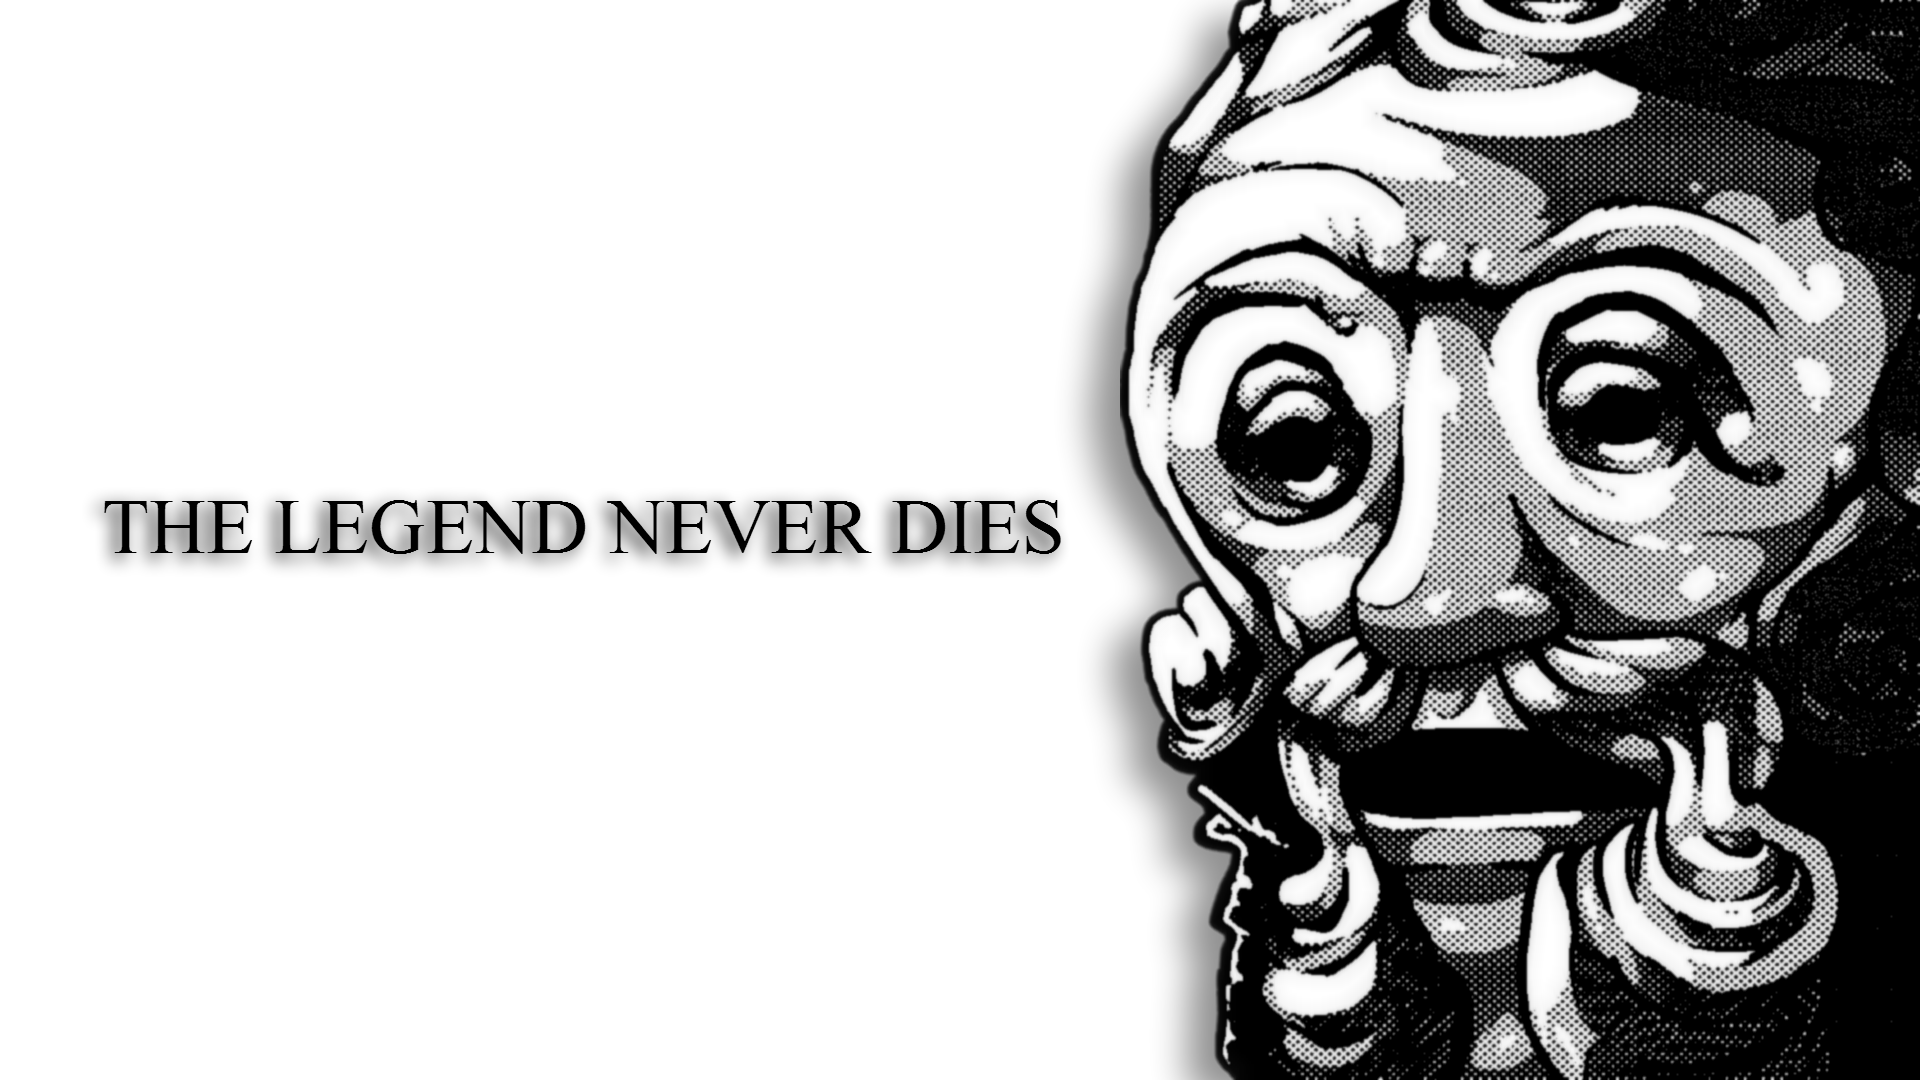 The Legend Never Dies (1920 x 1080)